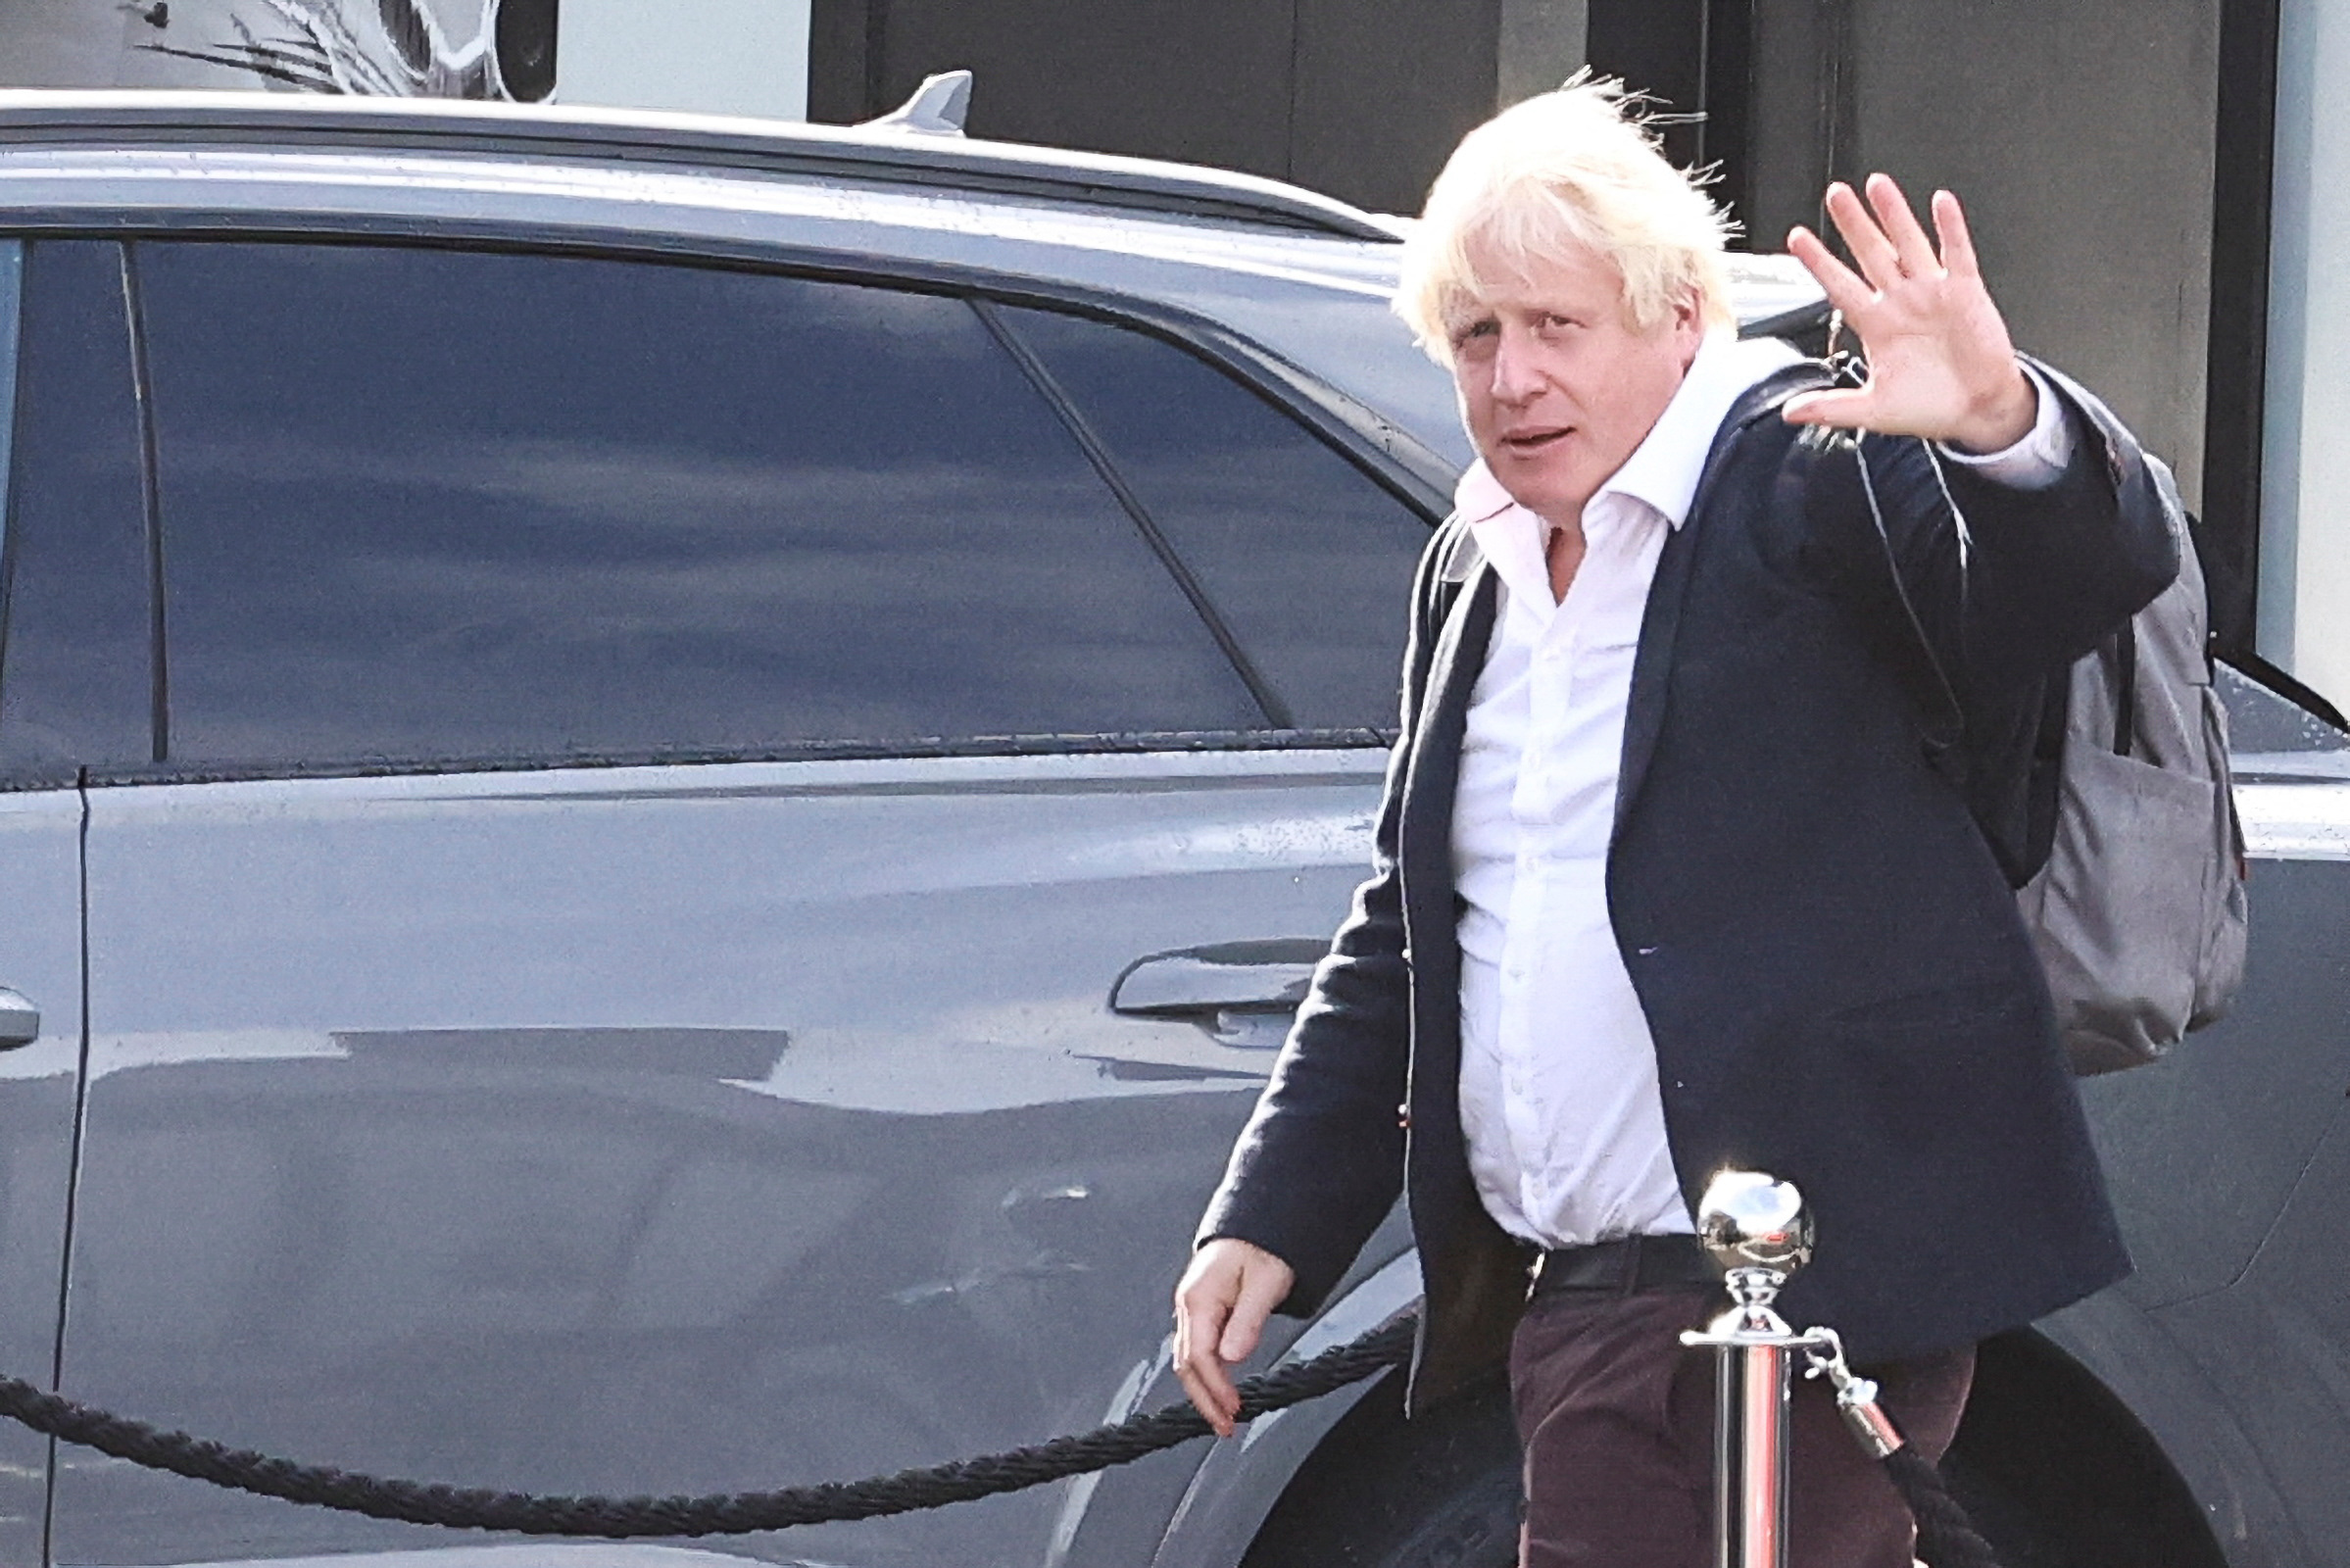 Former British PM Johnson at Gatwick Airport near London